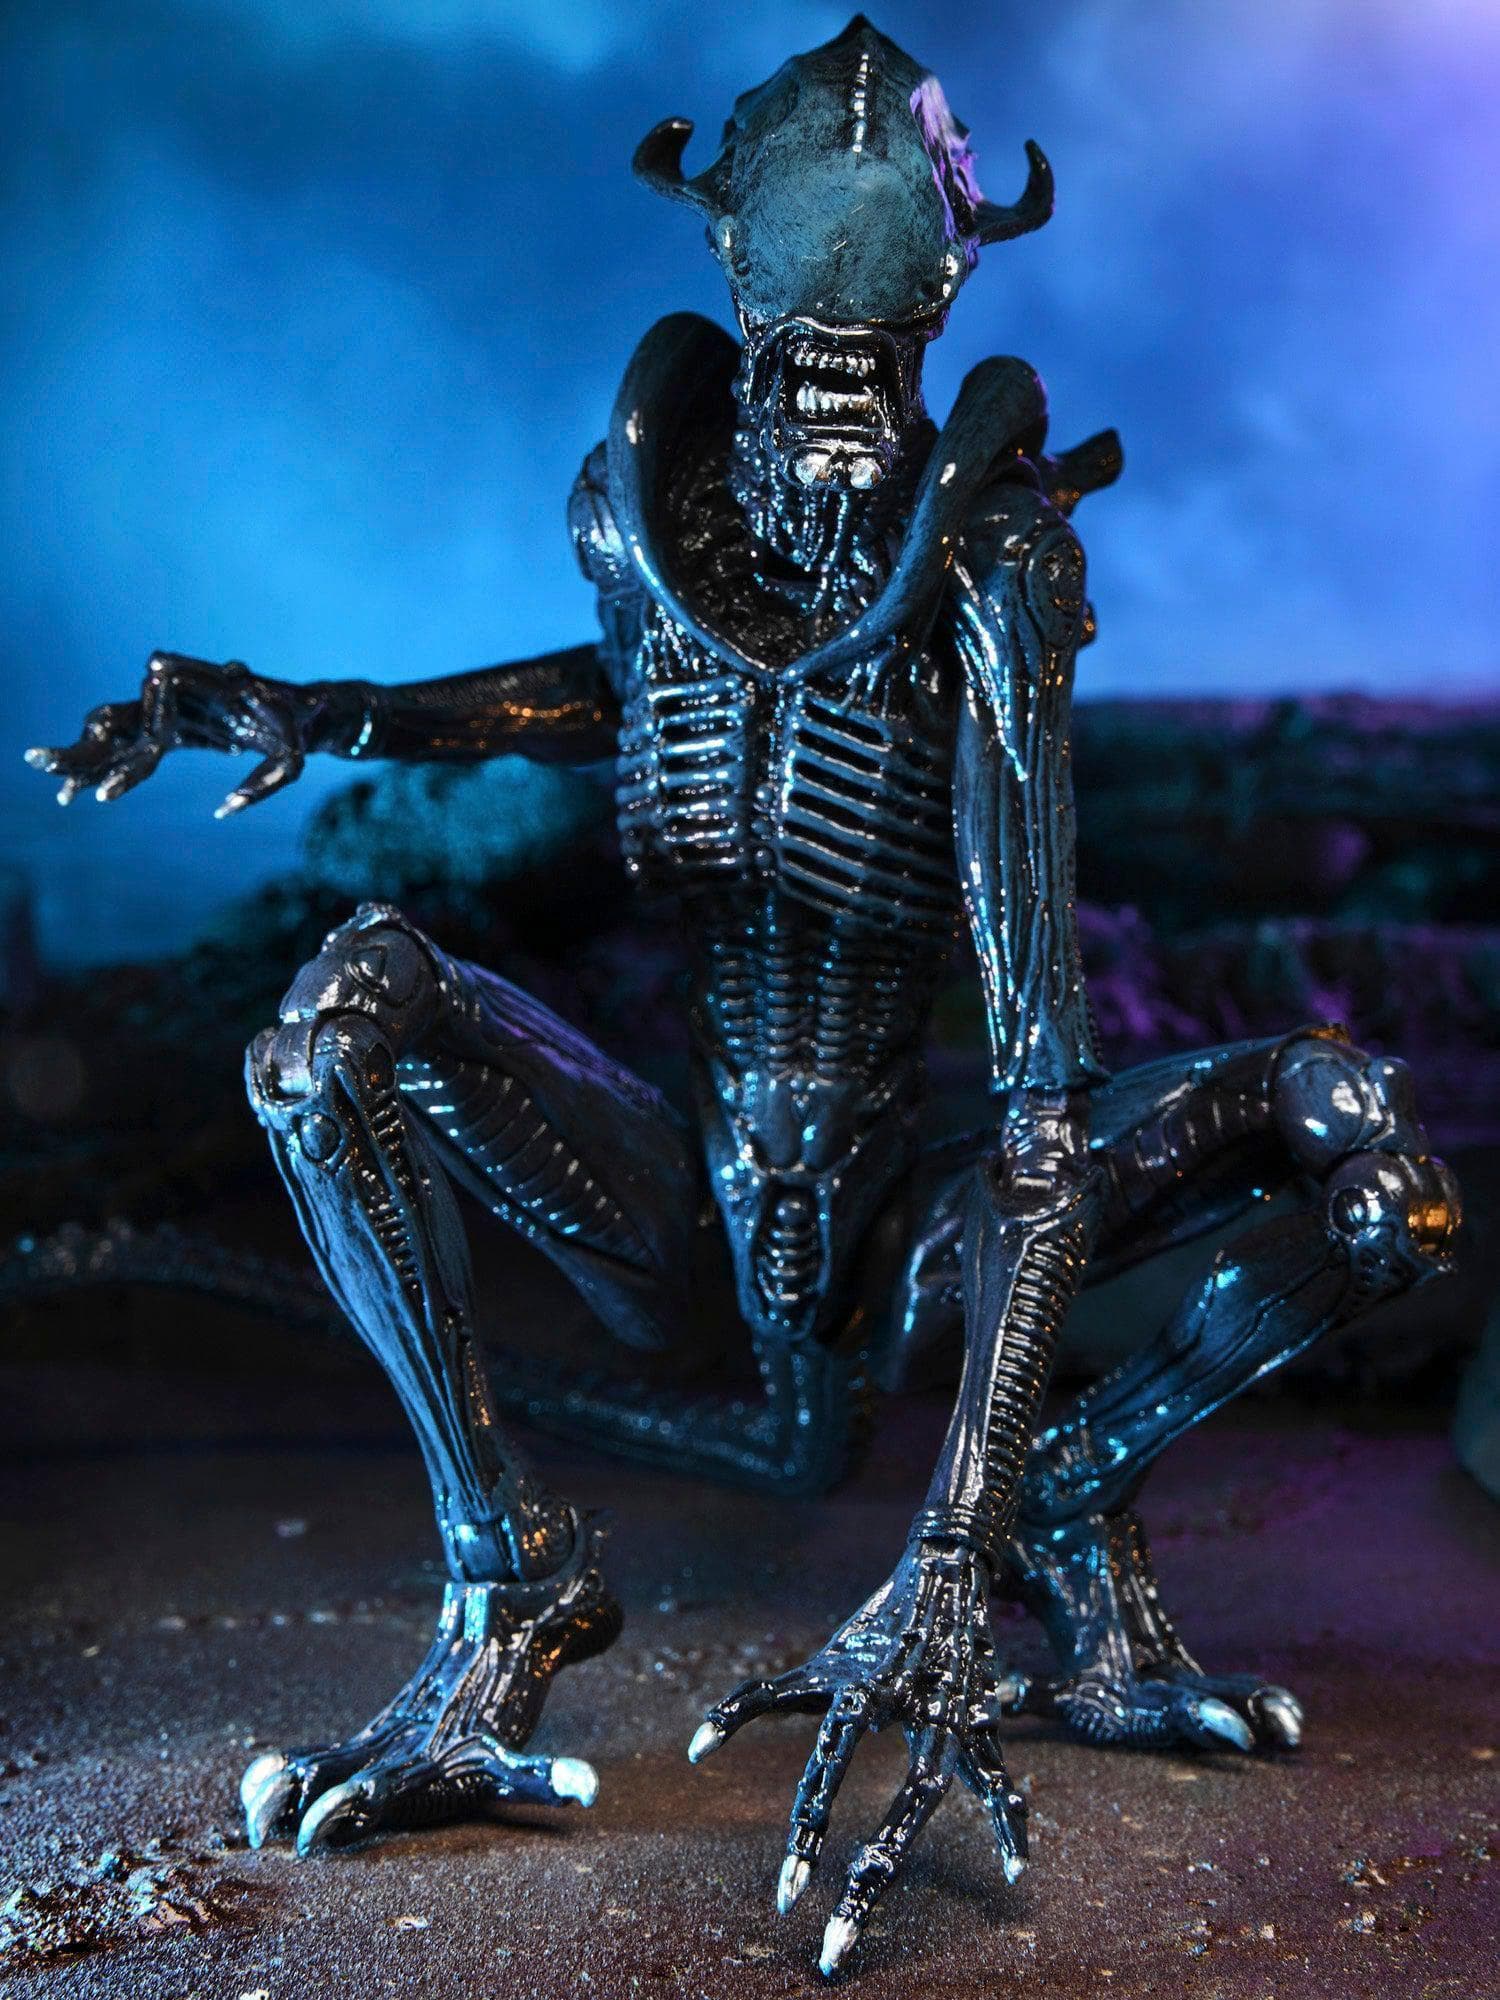 NECA - Alien vs Predator - 7" Scale Action Figure - Arachnoid Alien (Movie Deco) - costumes.com